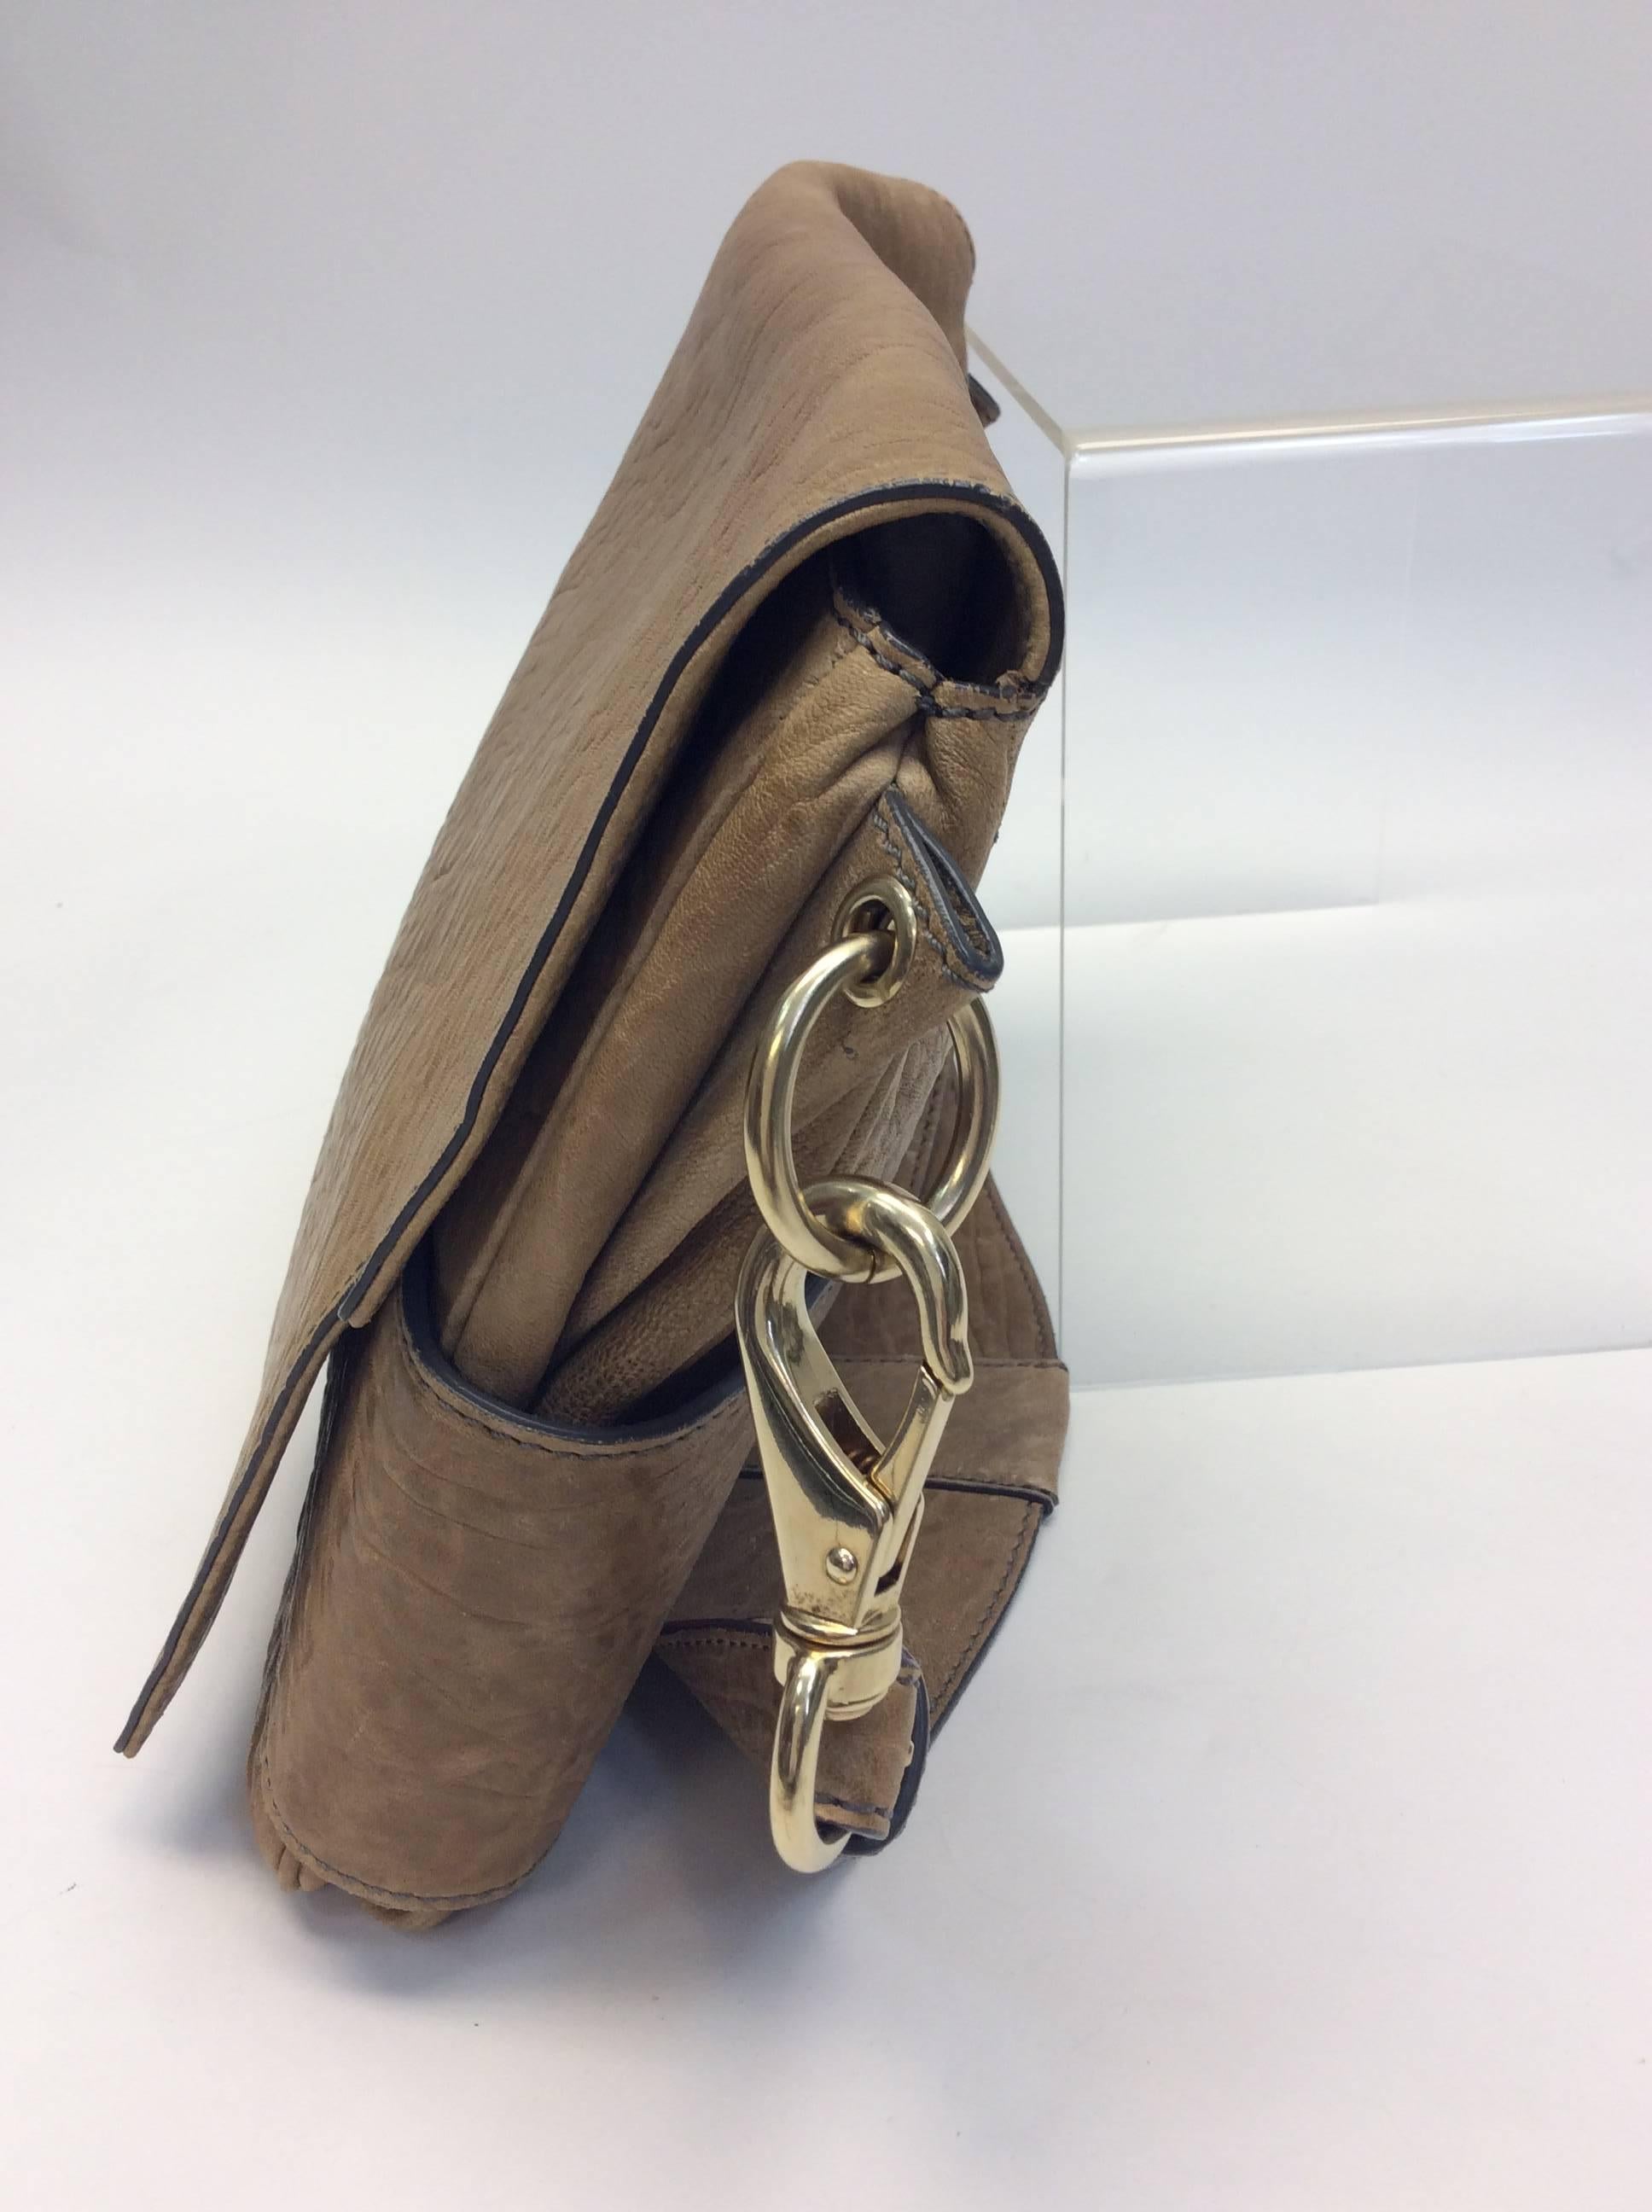 Givenchy Leather Camel Handbag
$499
Leather
13